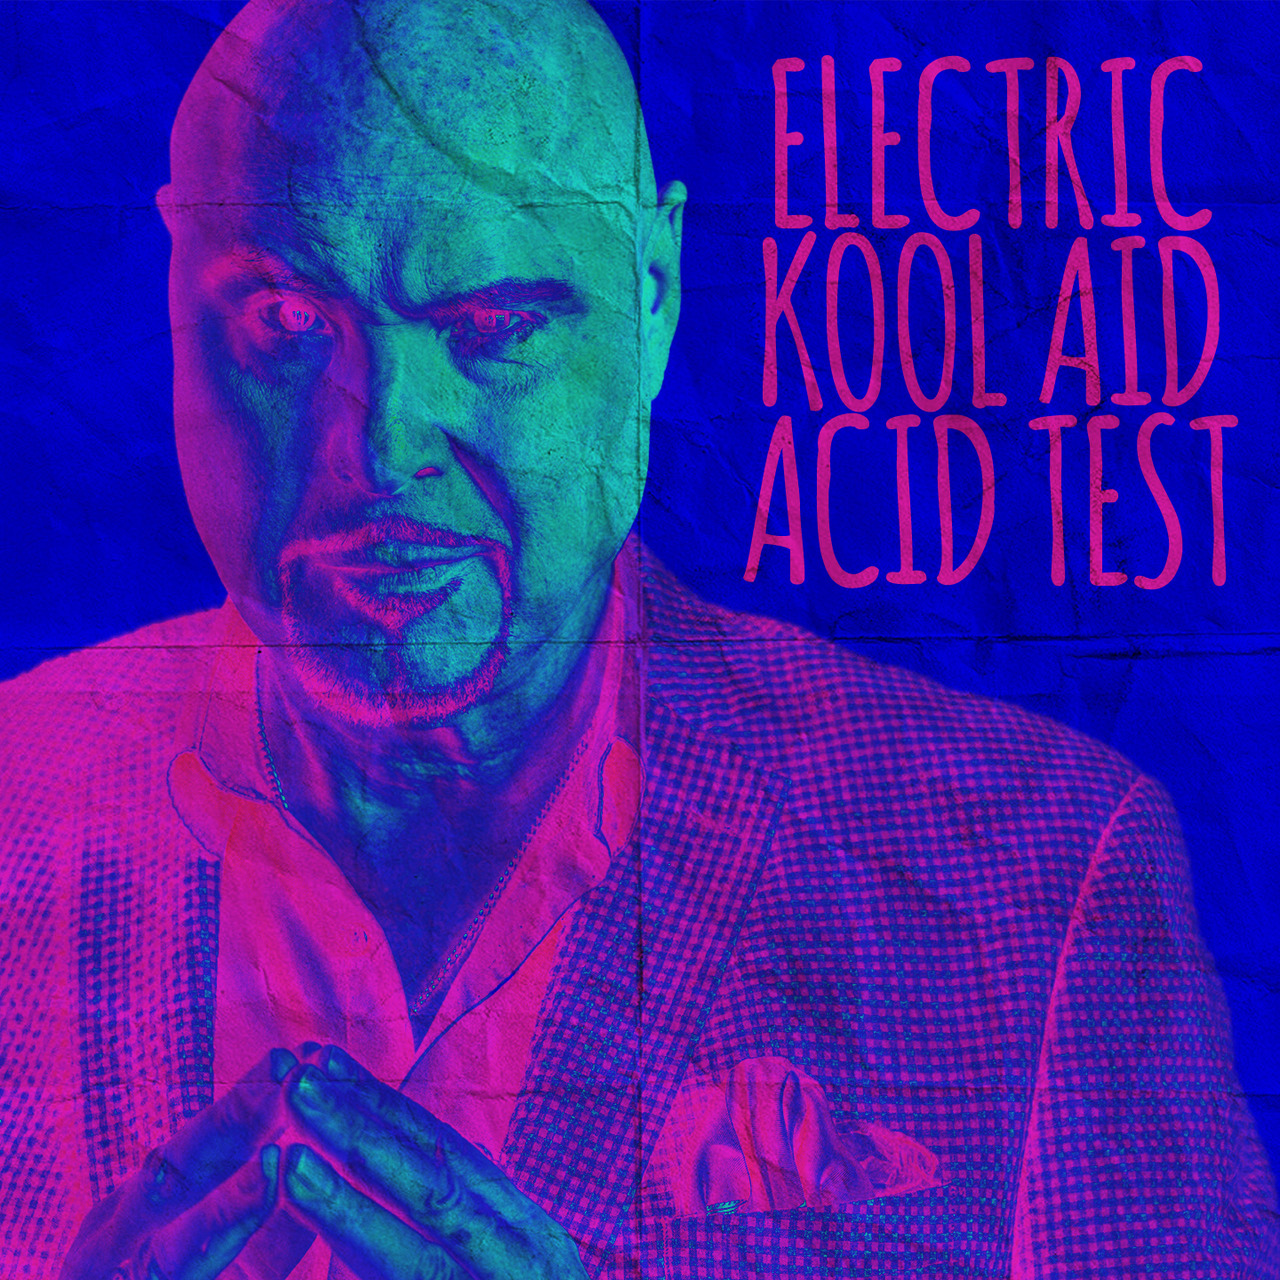 Docc Hilford - Electric Kool Aid Acid Test